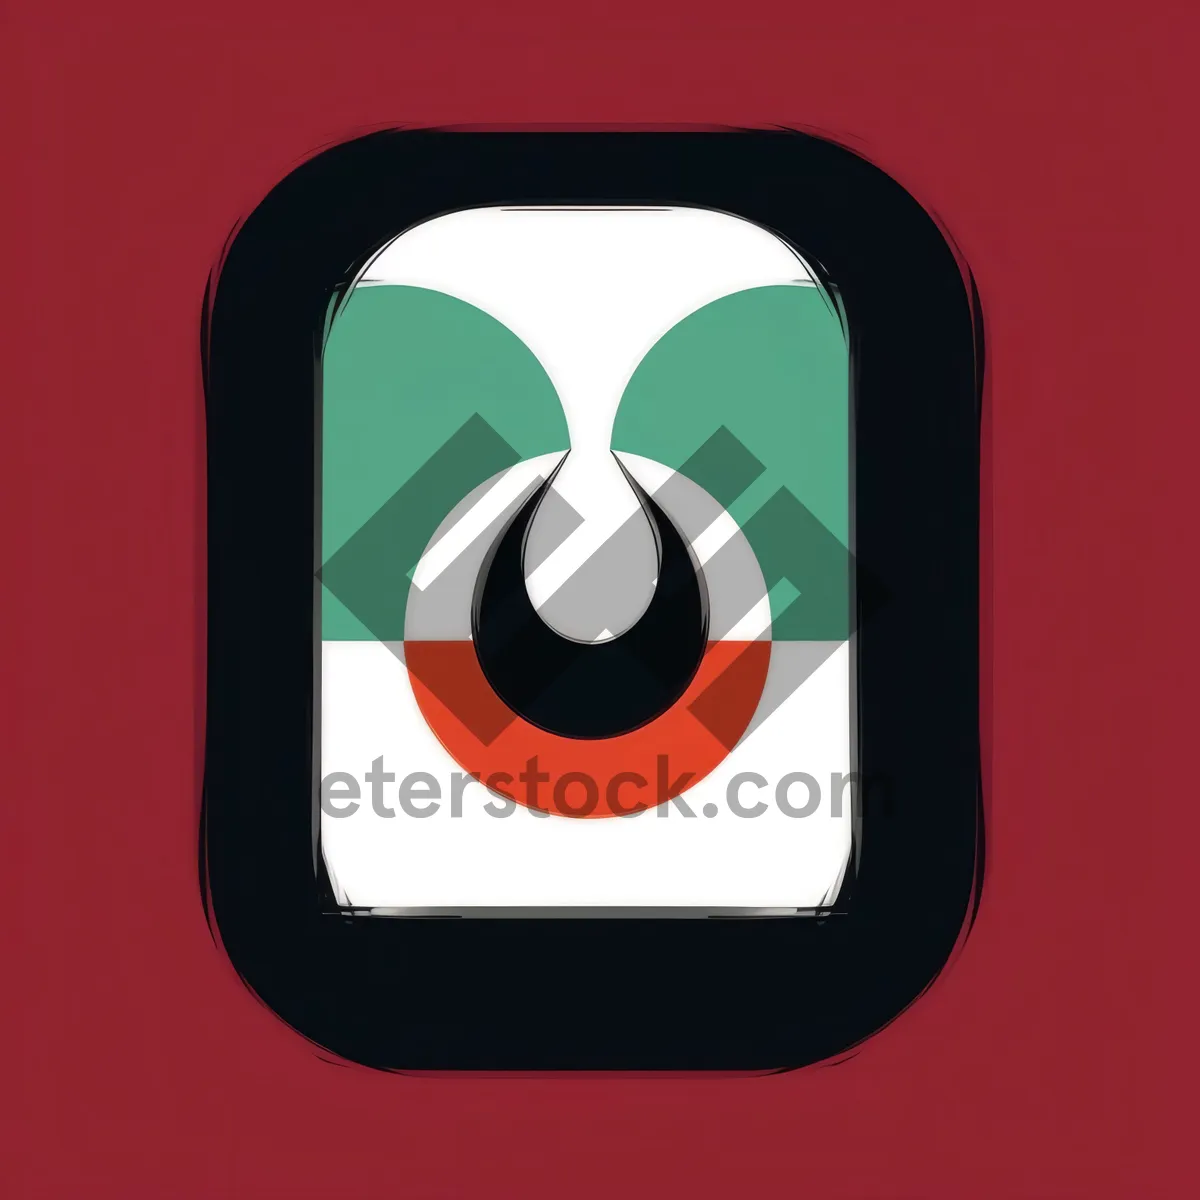 Picture of Shiny Square Button Icon: Modern, Vibrant, and Bright